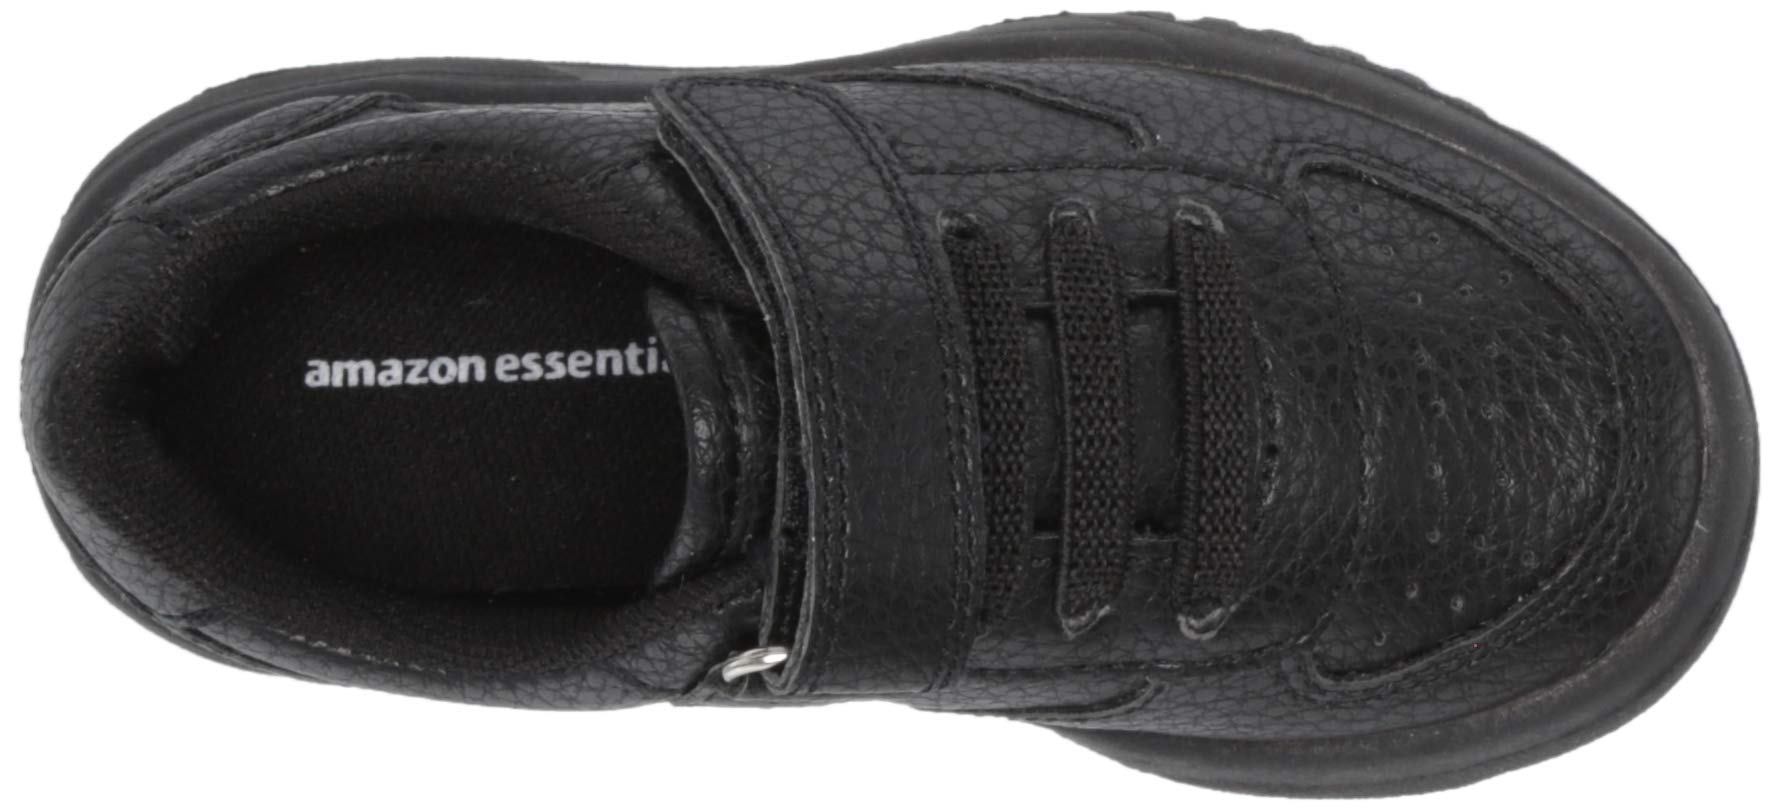 Amazon Essentials Unisex-Child Uniform Sneaker